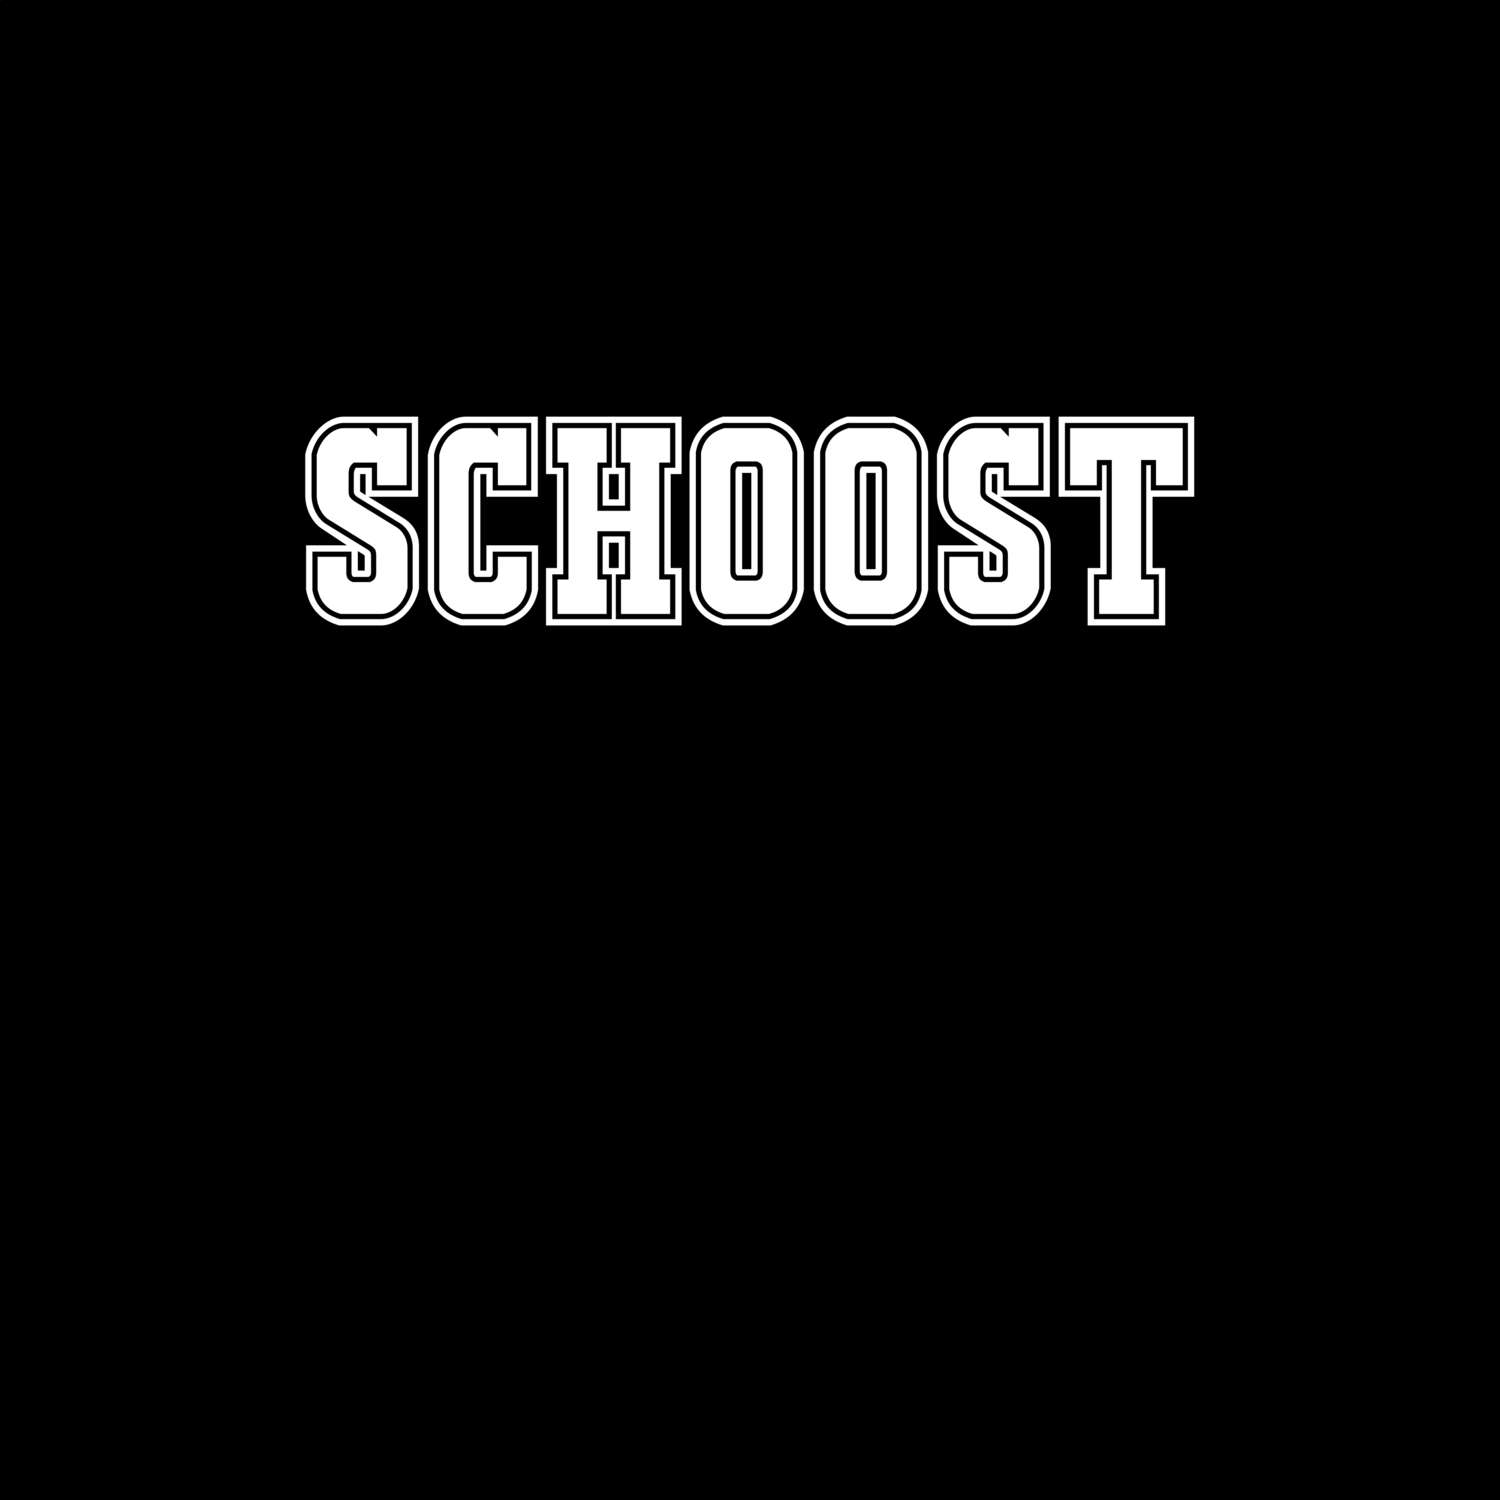 Schoost T-Shirt »Classic«